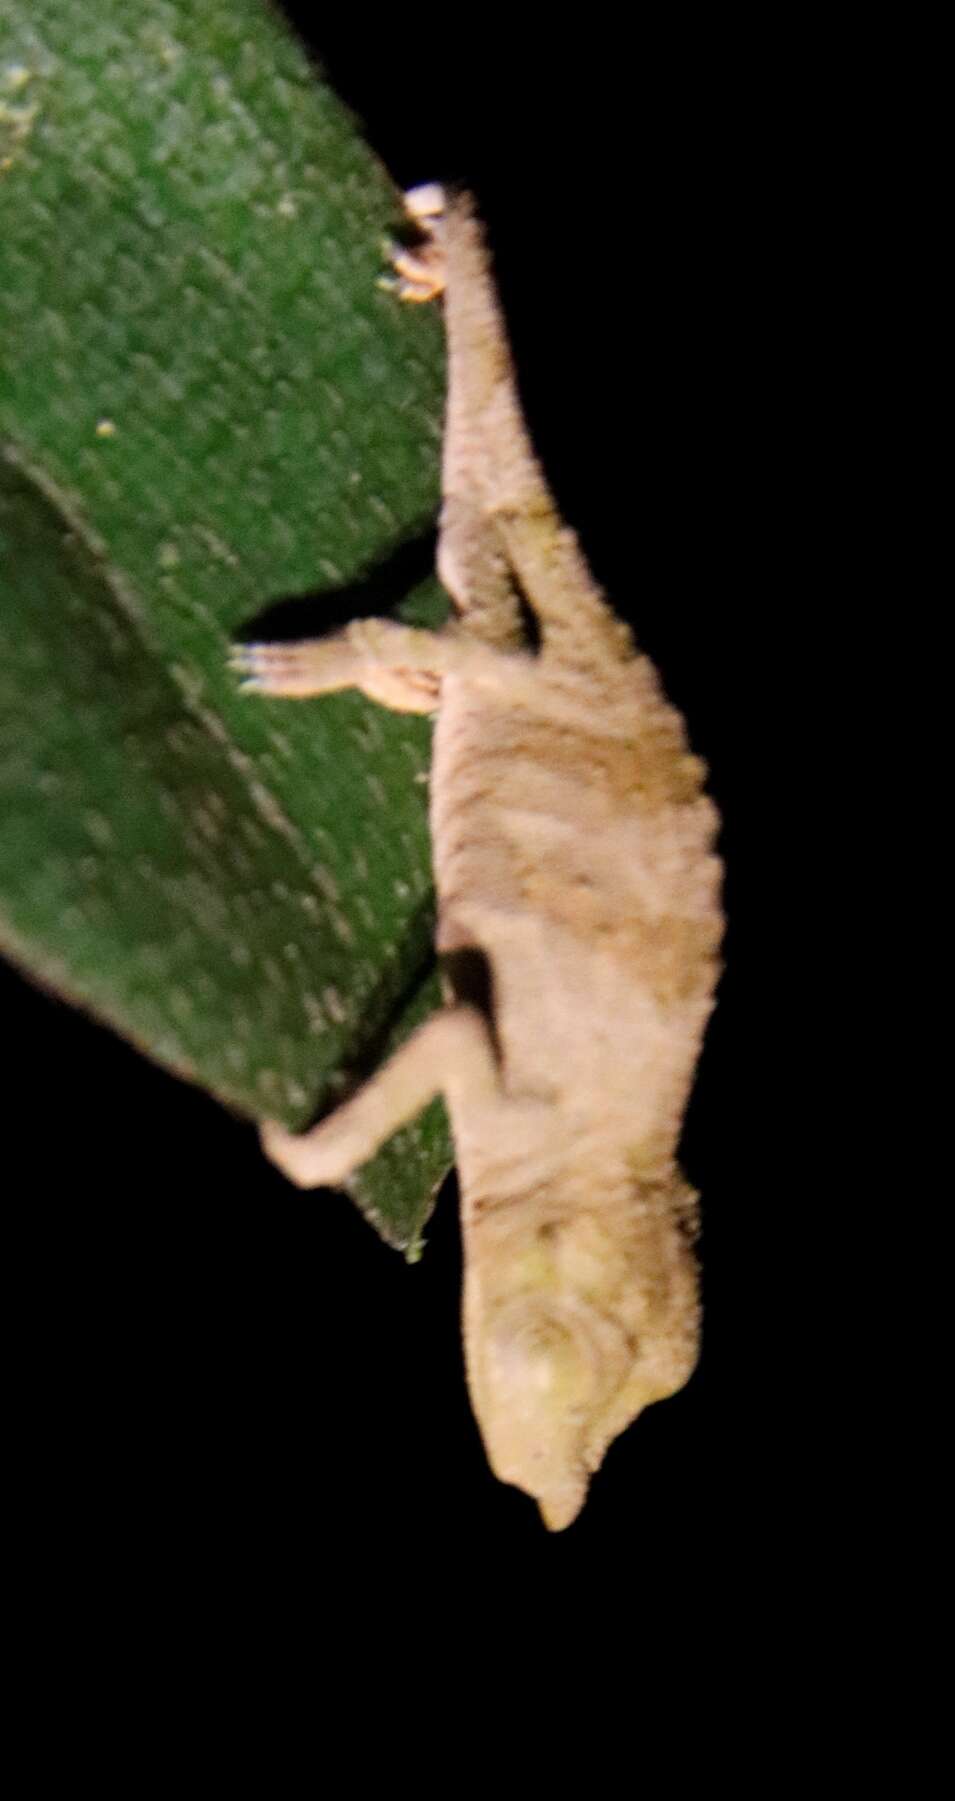 Image of Marshall's African Leaf Chameleon